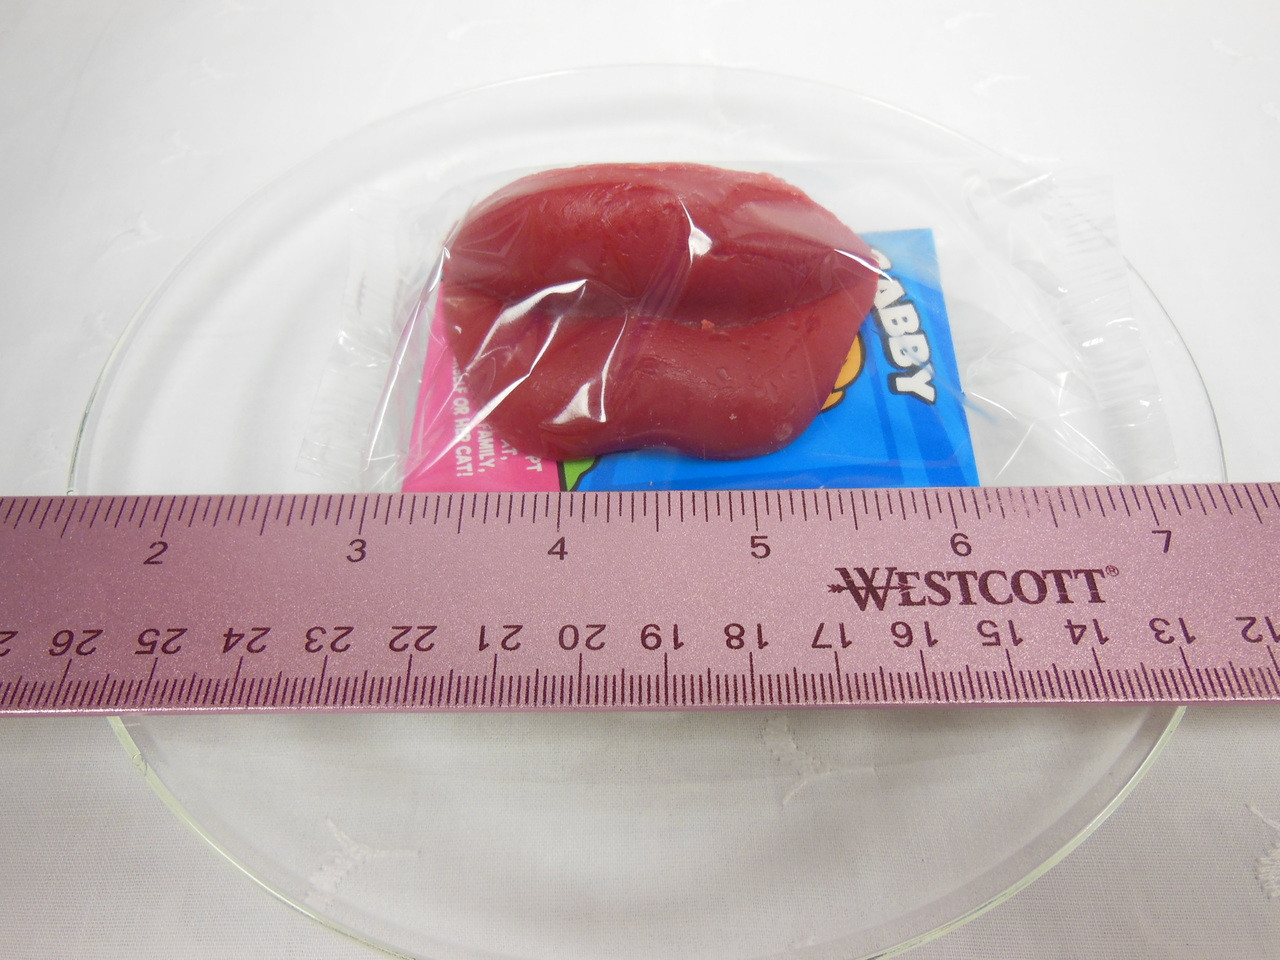  Wack-O-Wax Wax Lips 24-Count Box, Cherry Flavor : Sports &  Outdoors